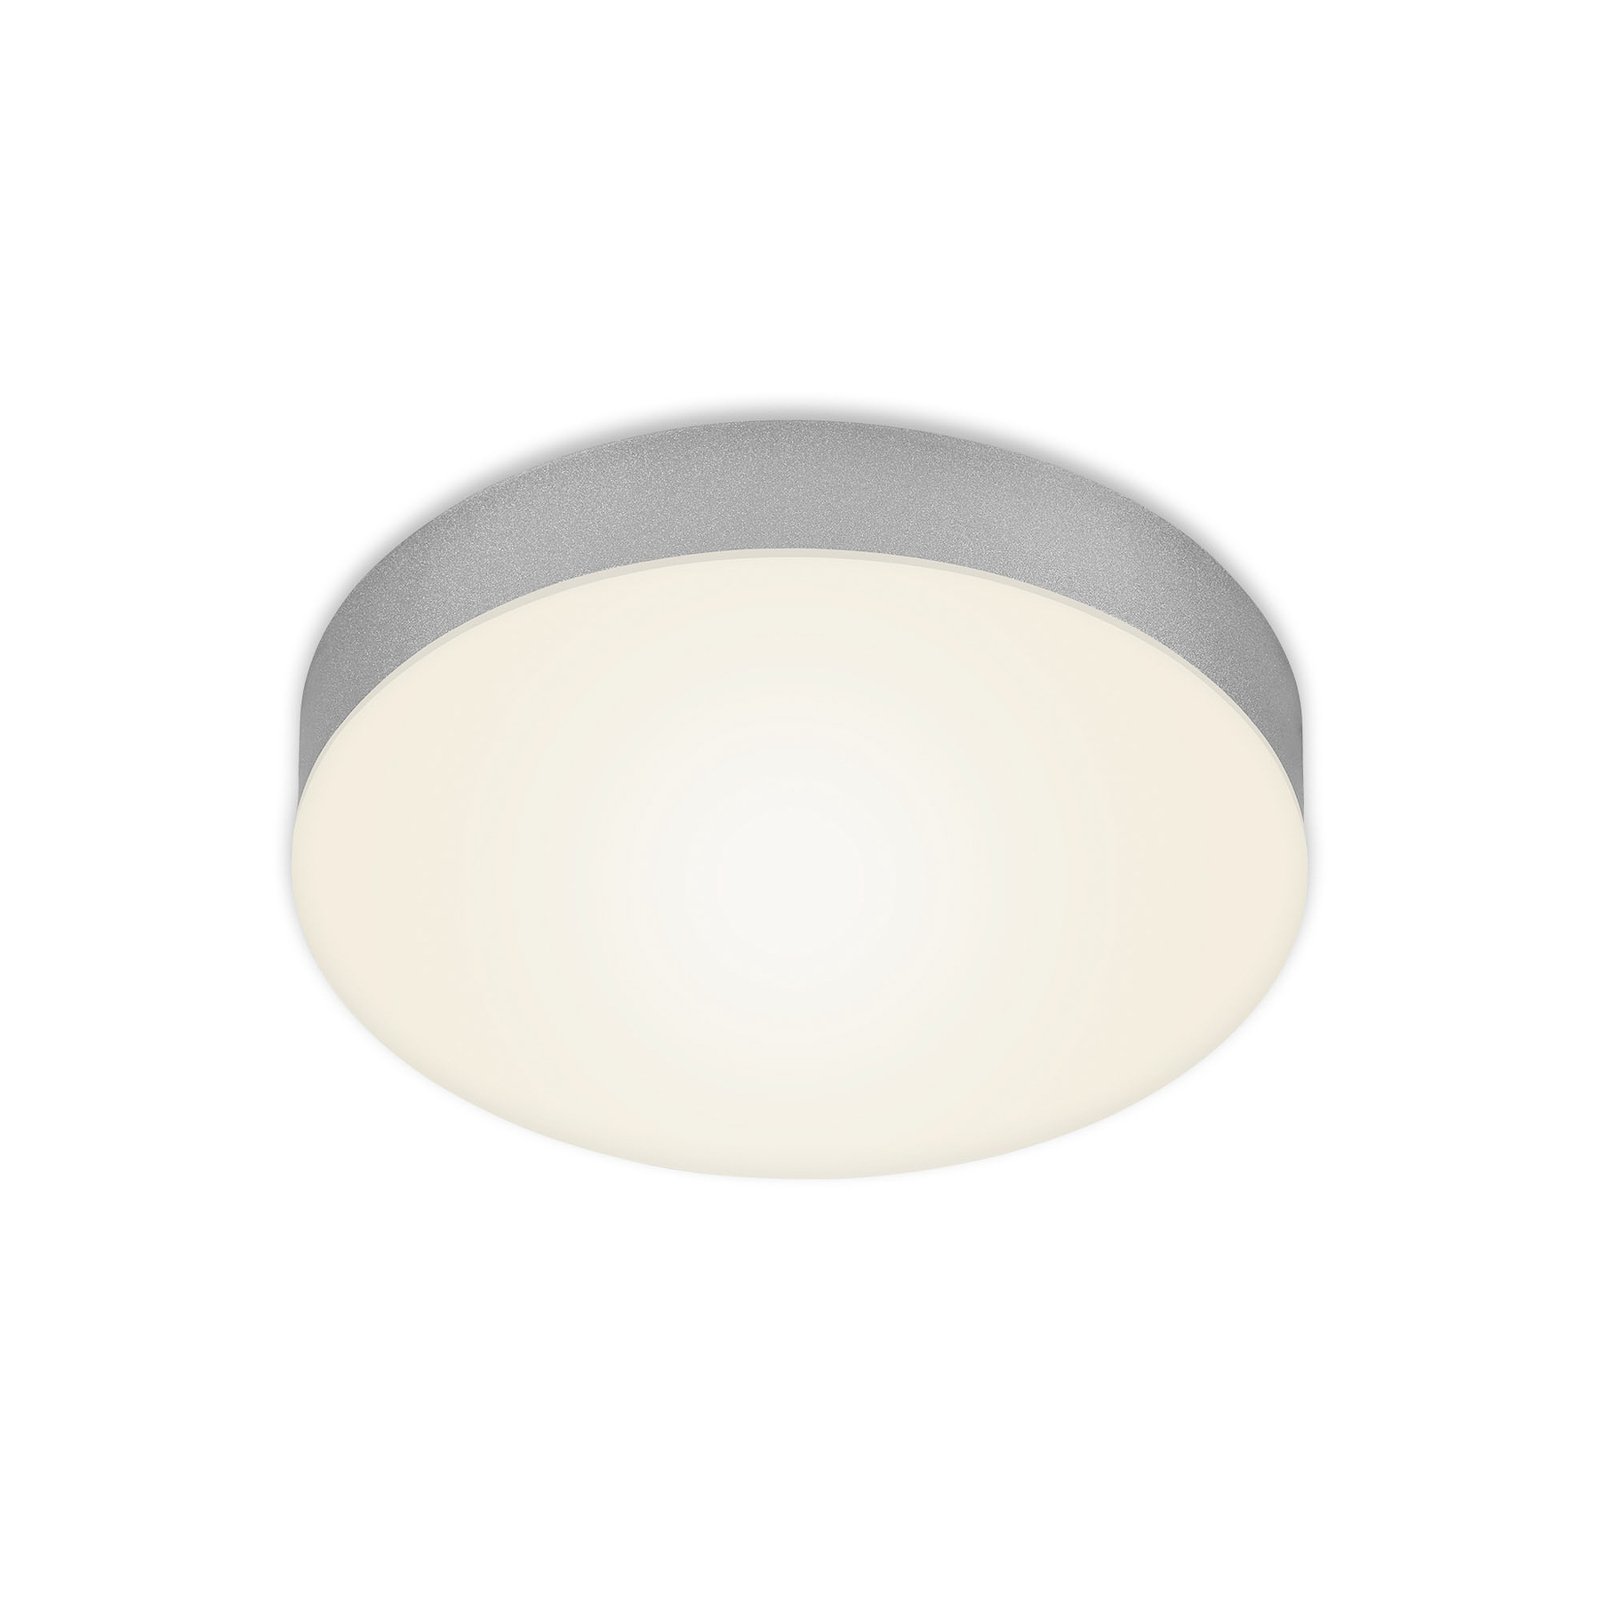 Flame LED plafondlamp, Ø 21,2 cm, zilver